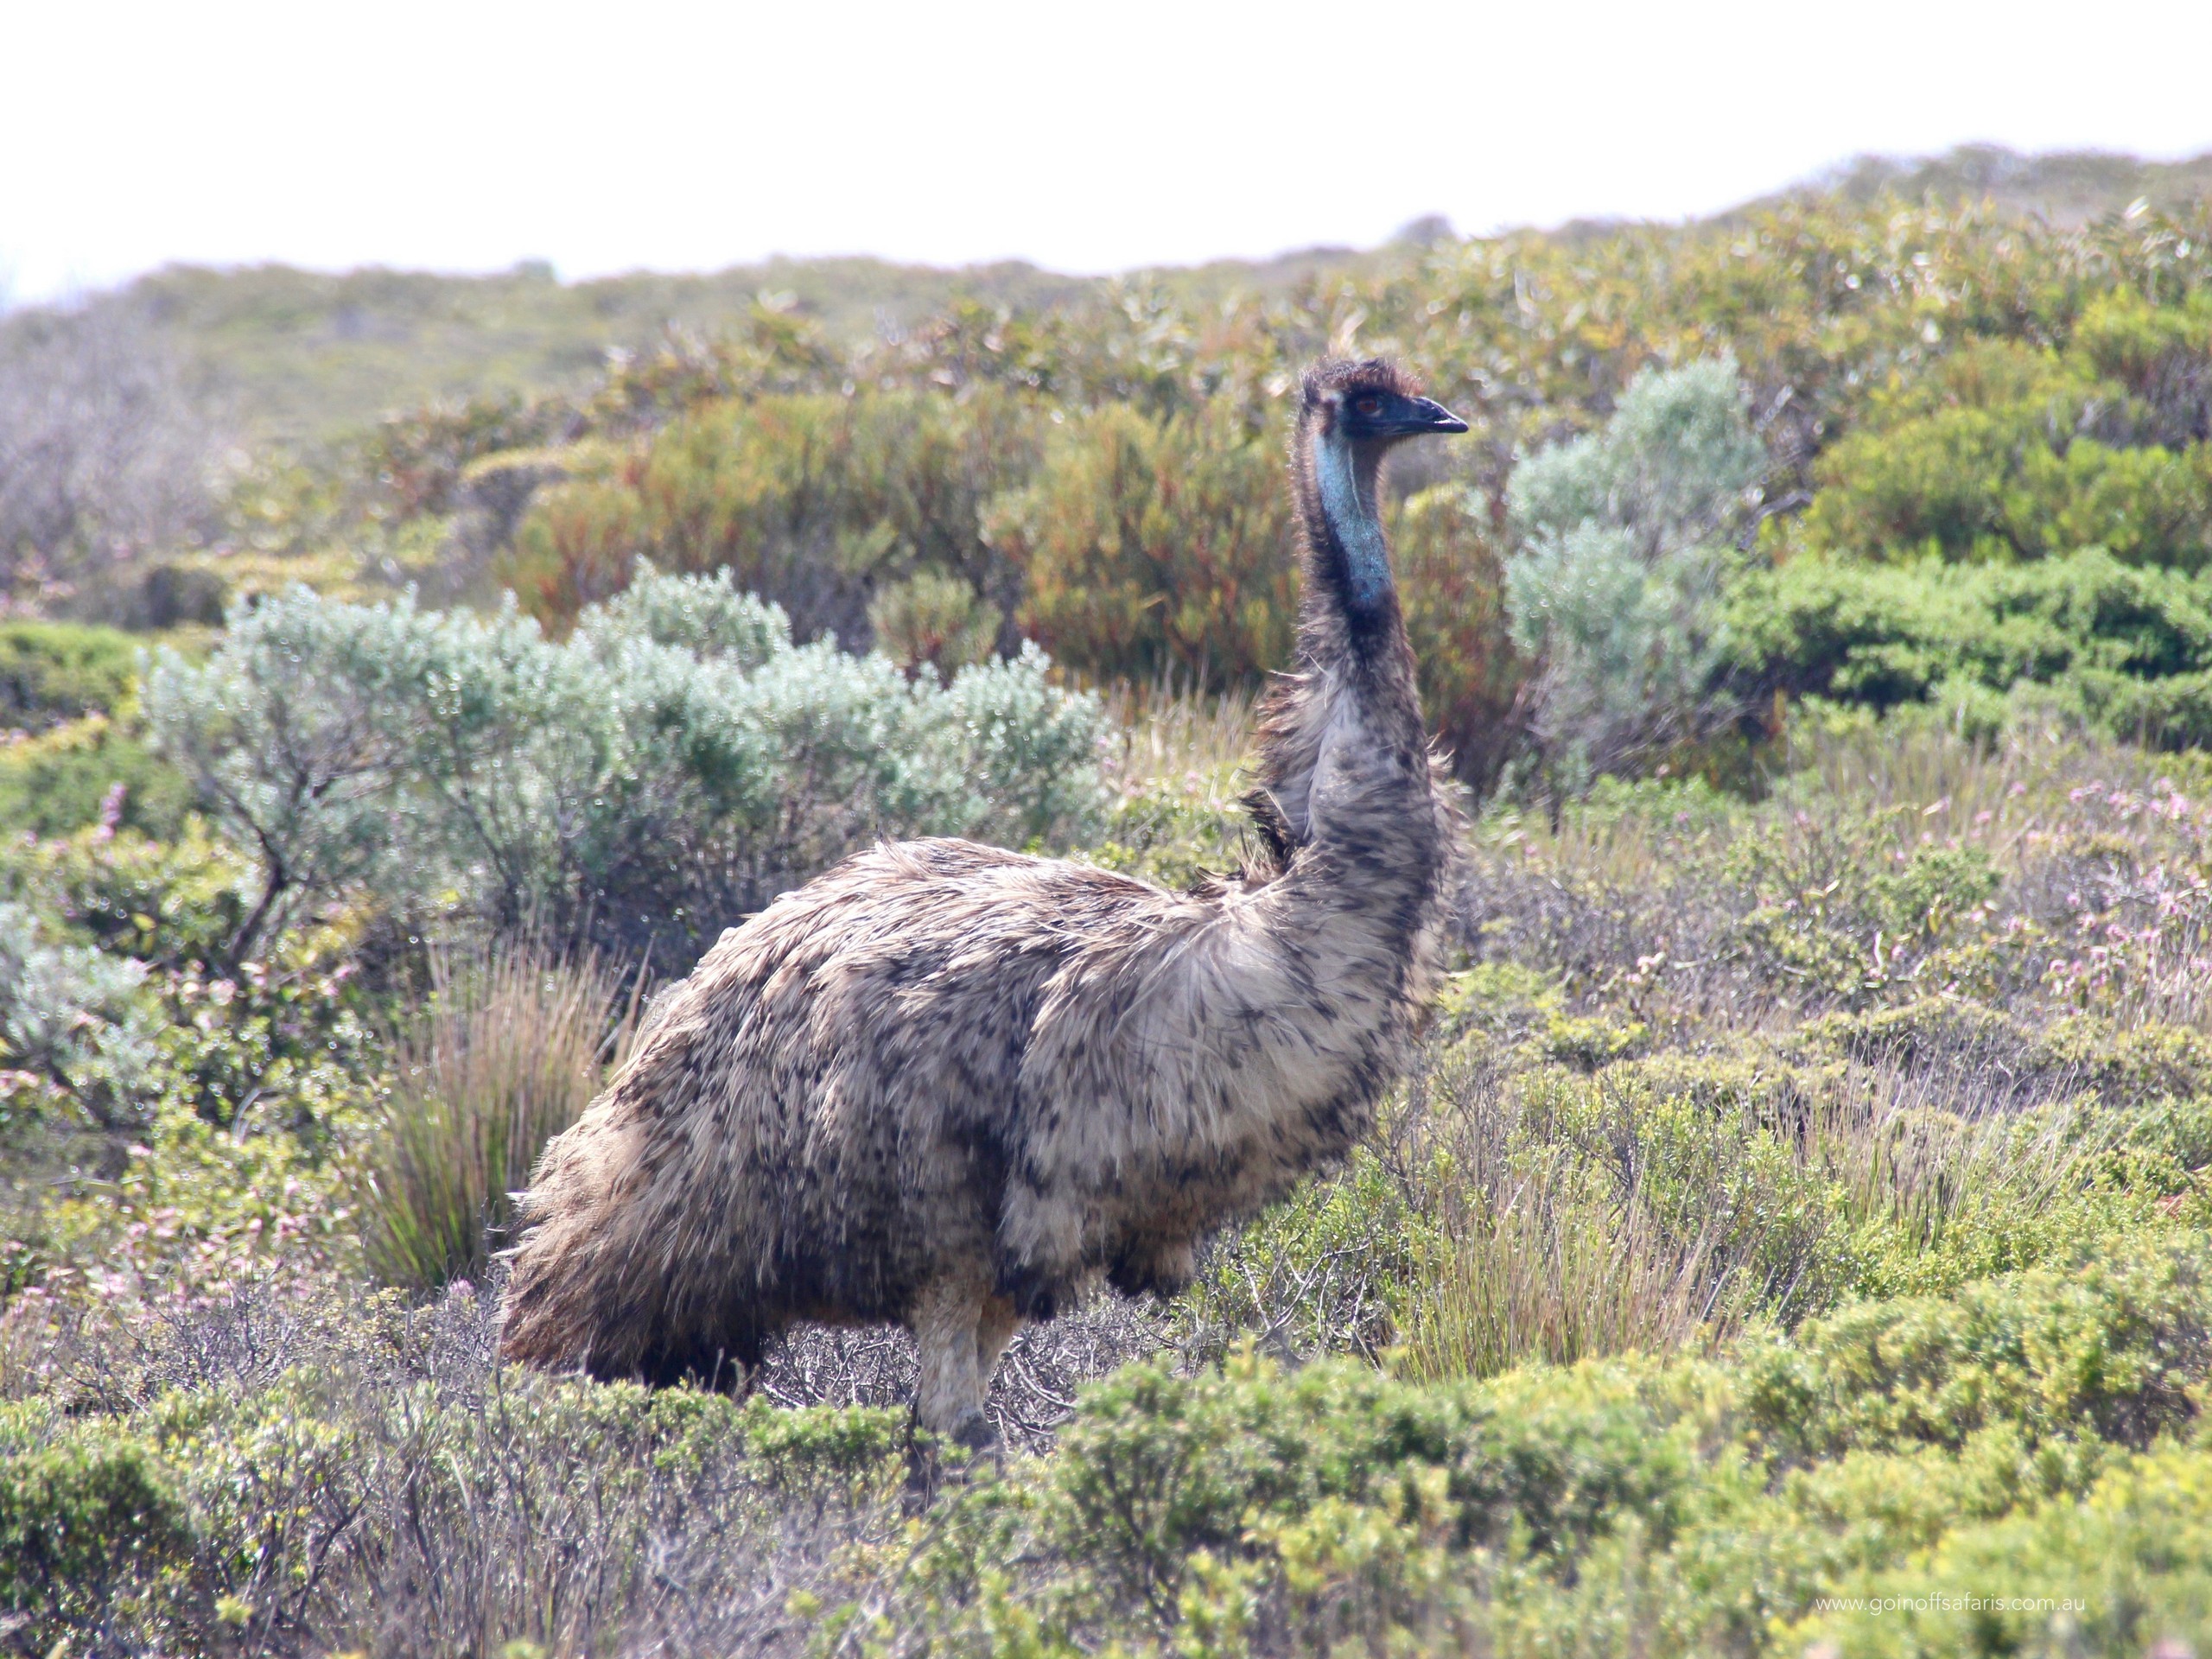 Emu seen along the Southern Coast of australia